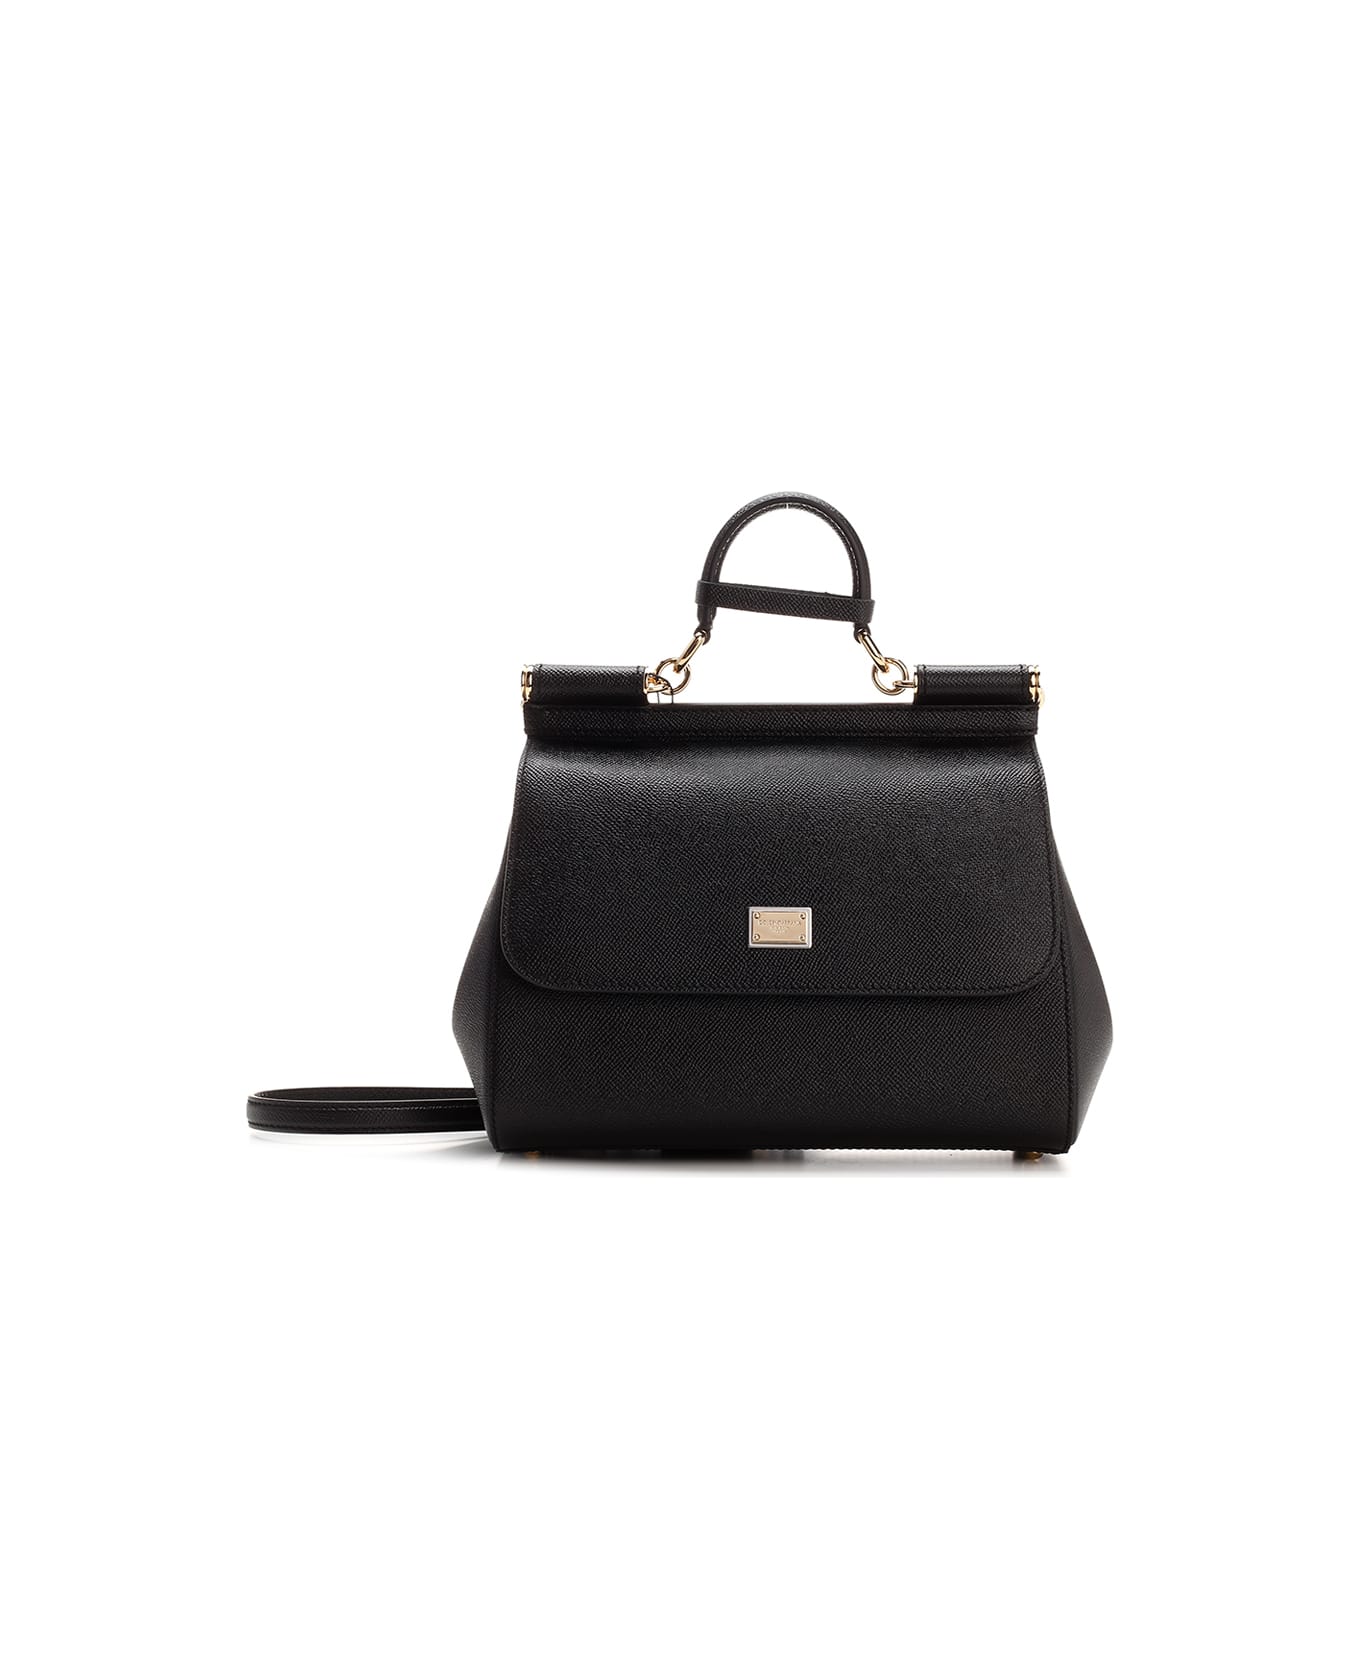 Dolce & Gabbana Medium 'sicily' Handbag - Nero トートバッグ